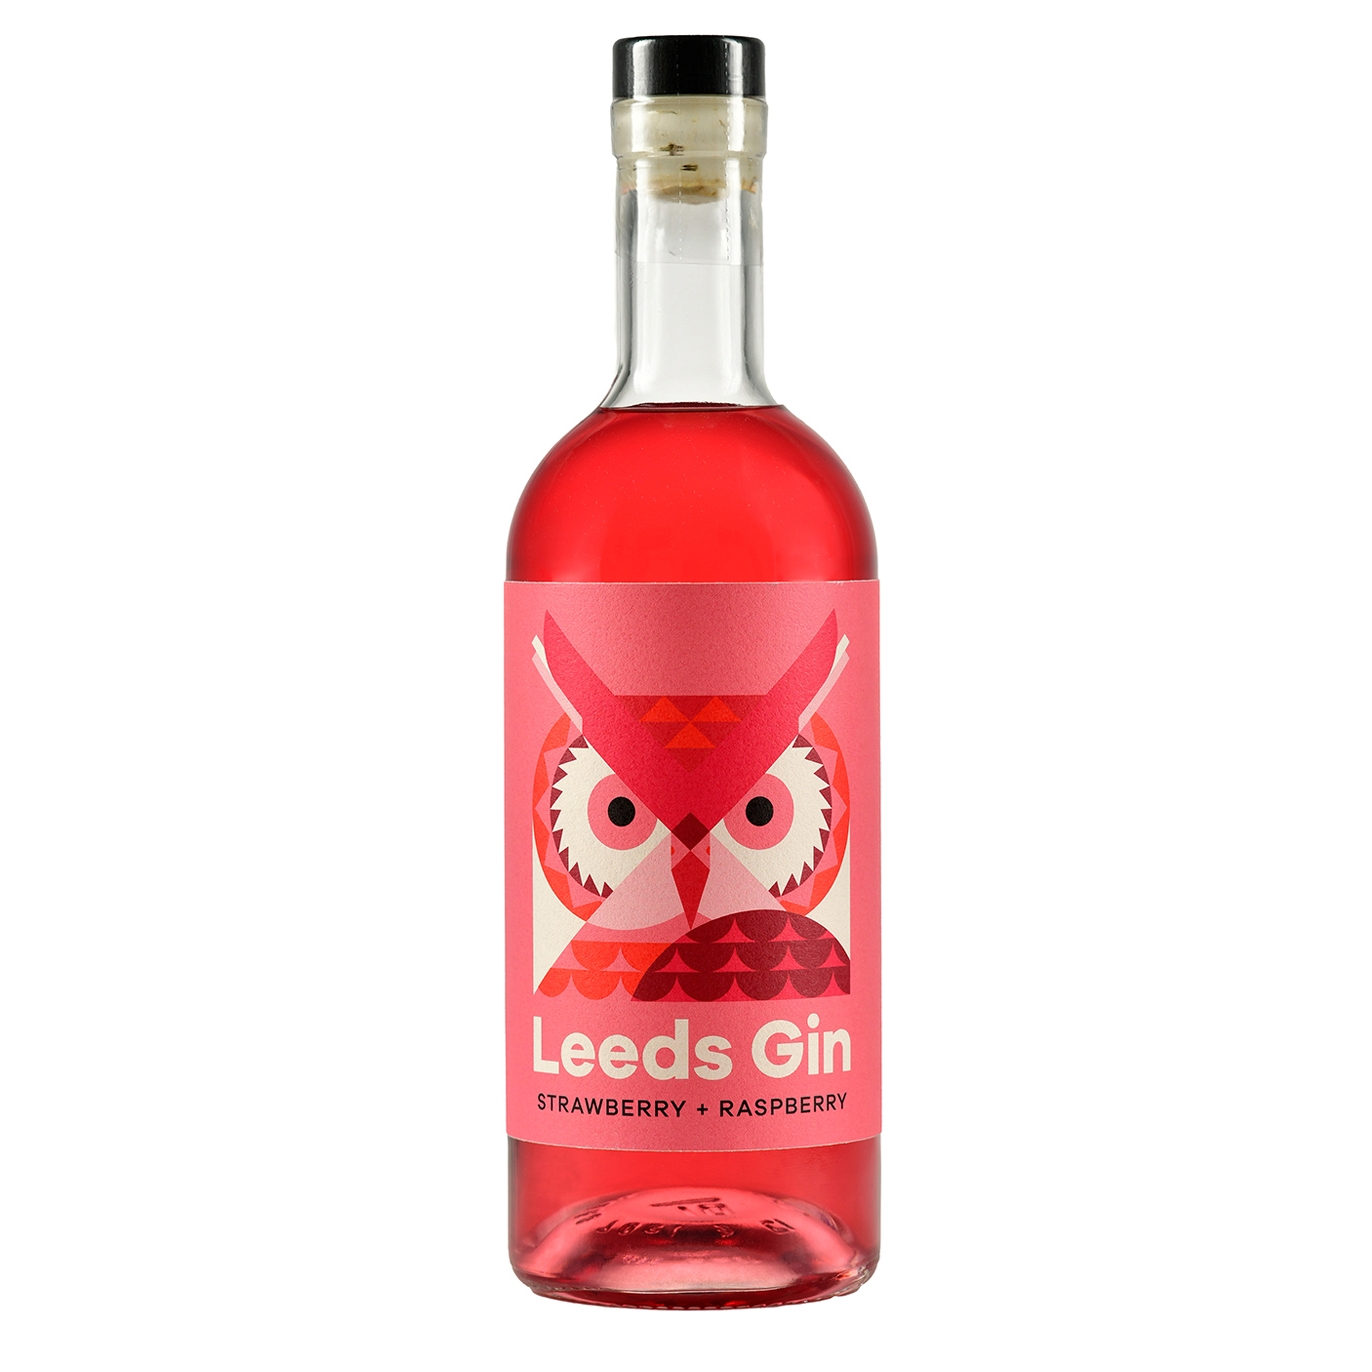 Leeds Gin Strawberry & Raspberry Gin